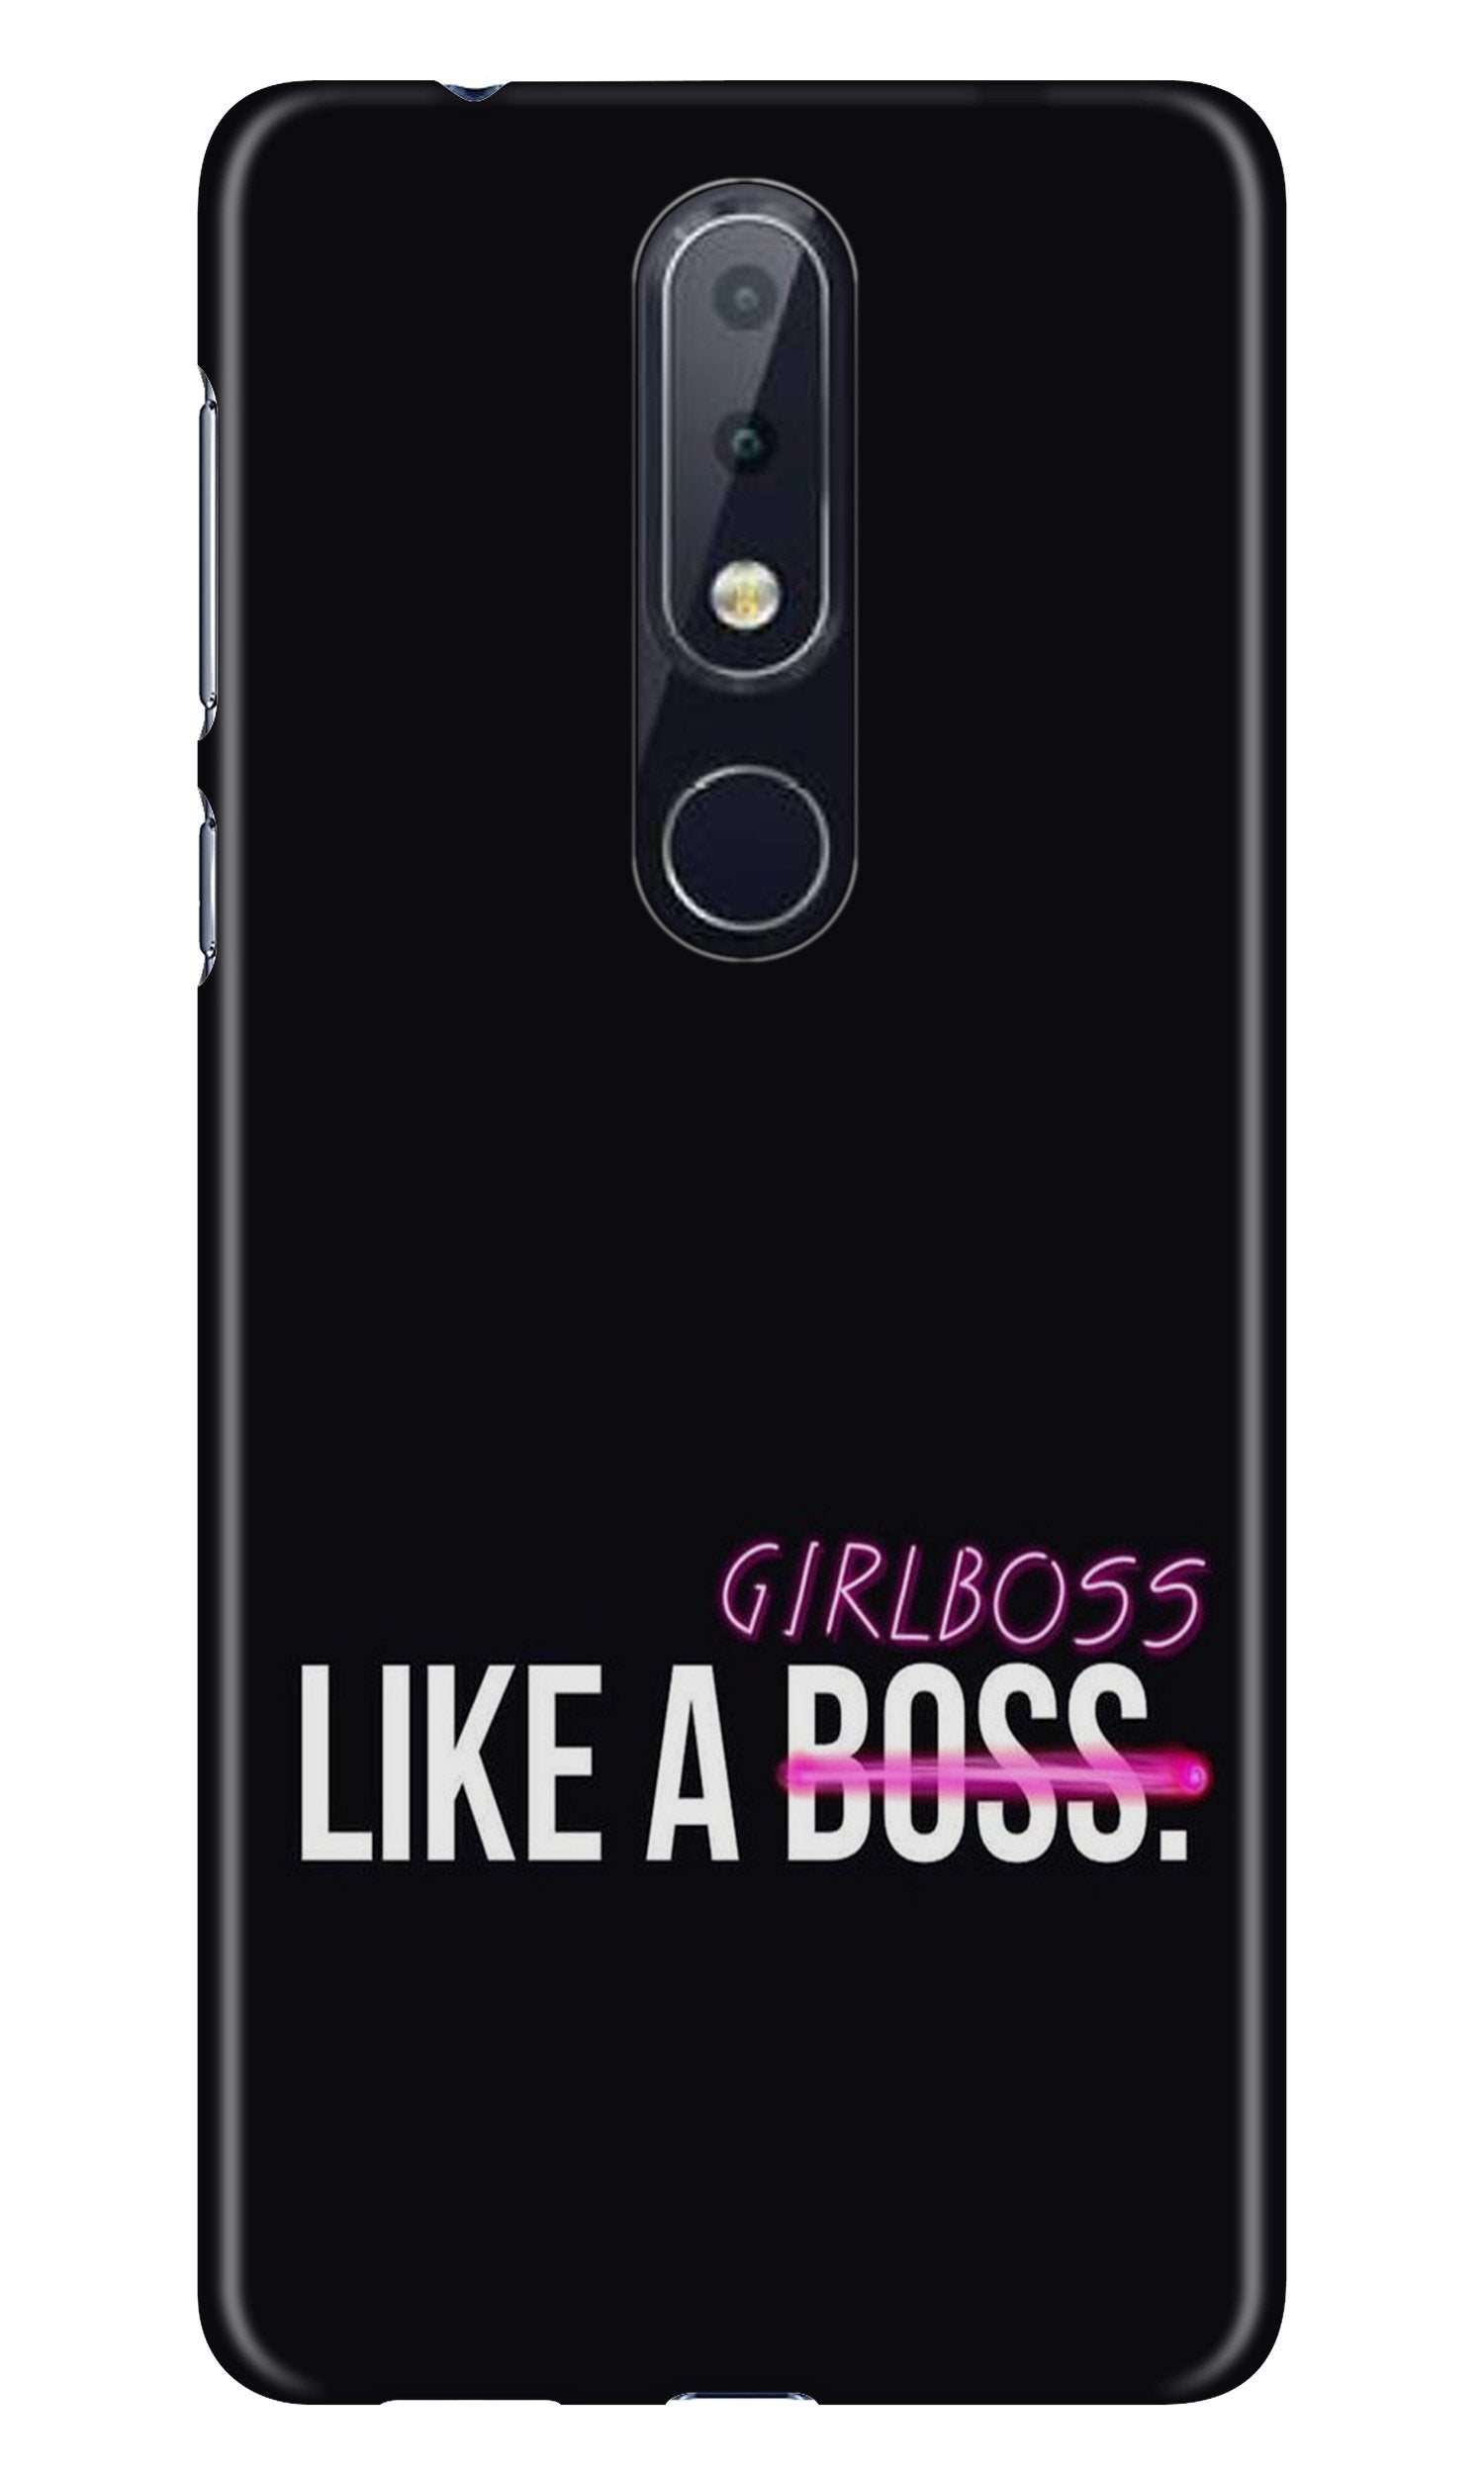 Like a Girl Boss Case for Nokia 6.1 Plus (Design No. 265)